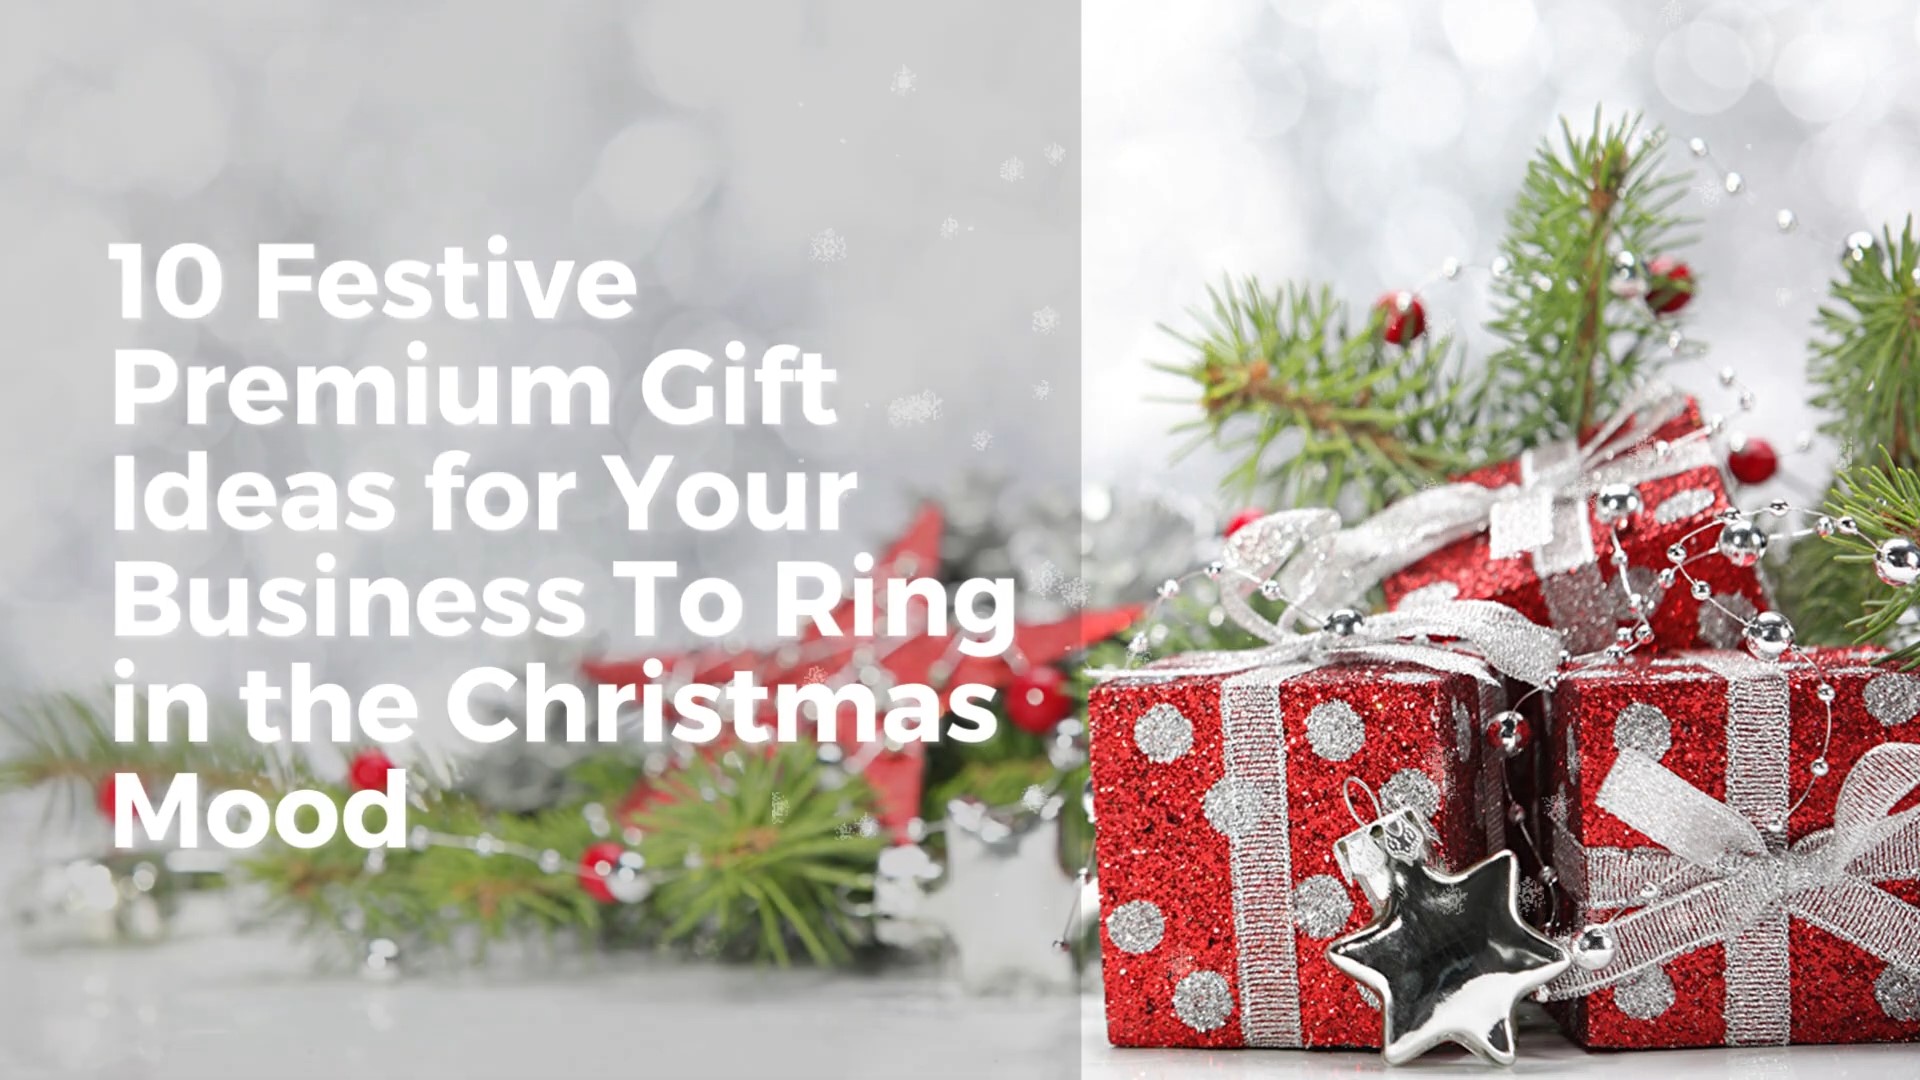 Festive premium gift ideas